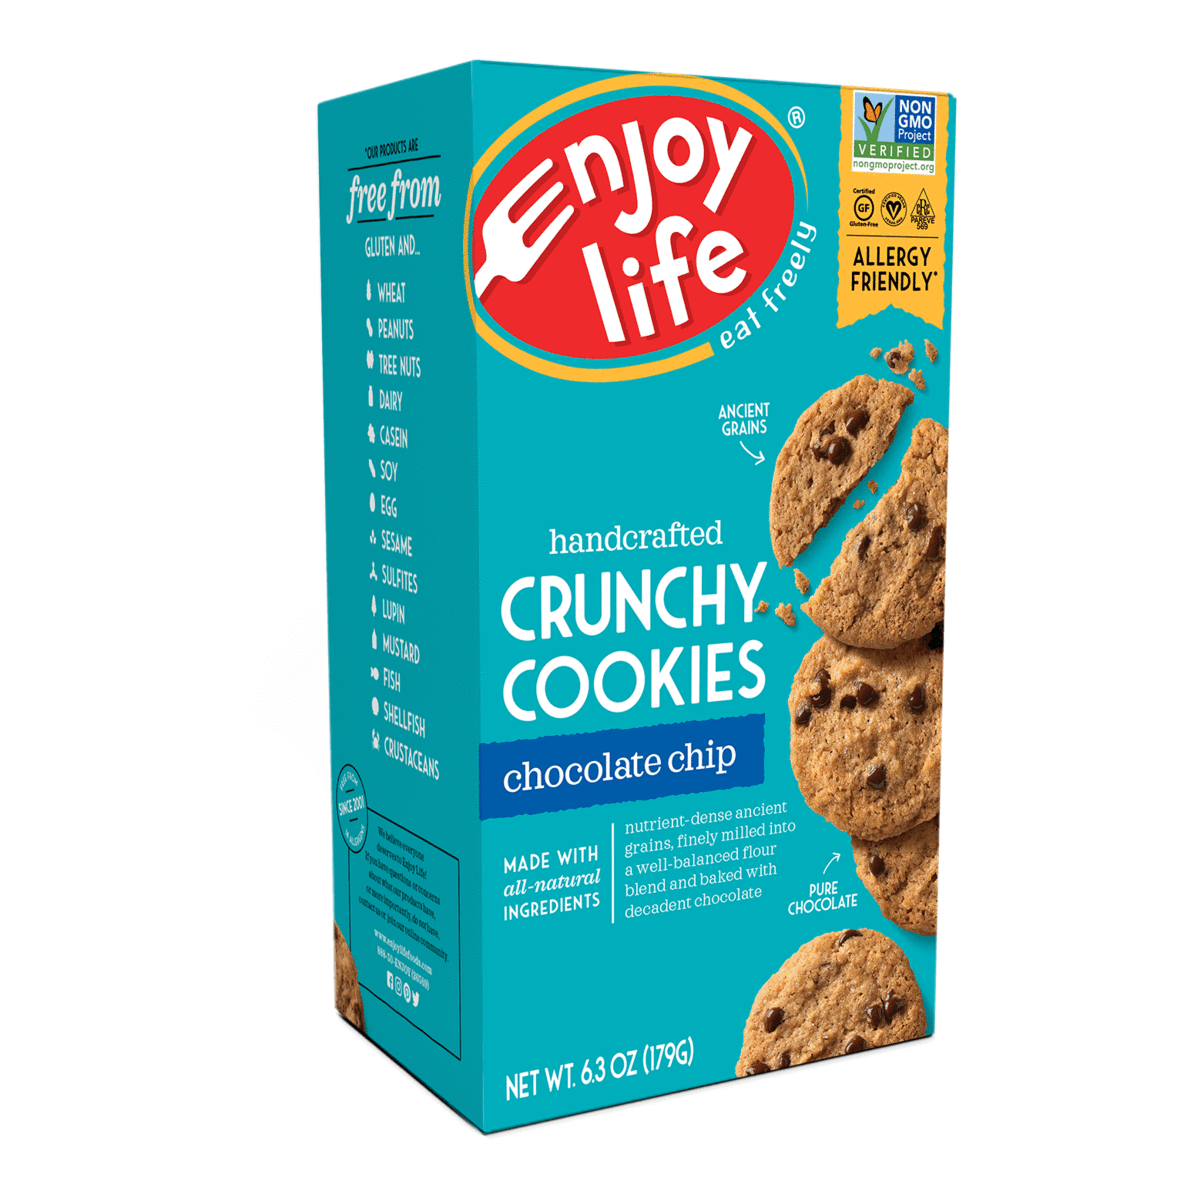 Enjoy Life Crunchy Cookies Chocolate Chip Allergy Friendly Gluten Free